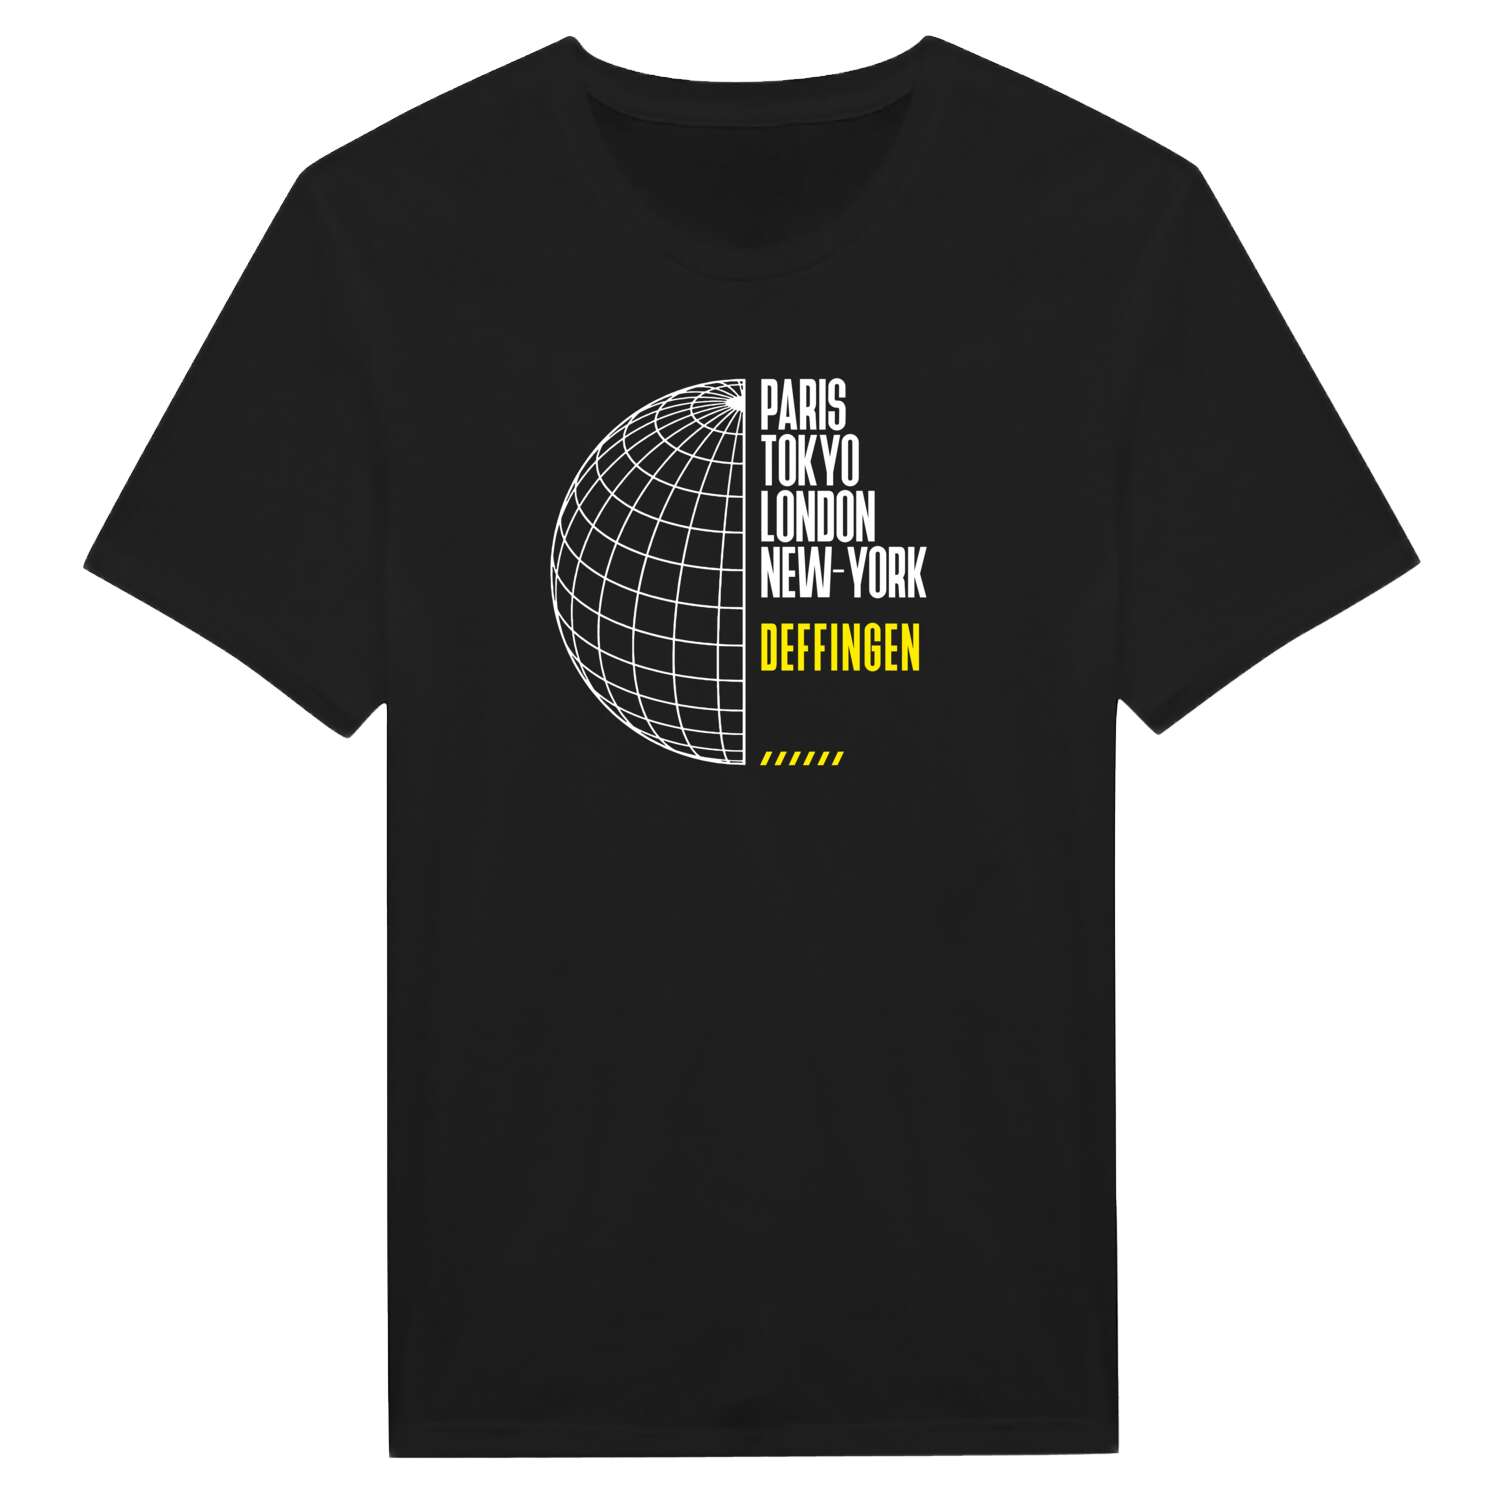 Deffingen T-Shirt »Paris Tokyo London«